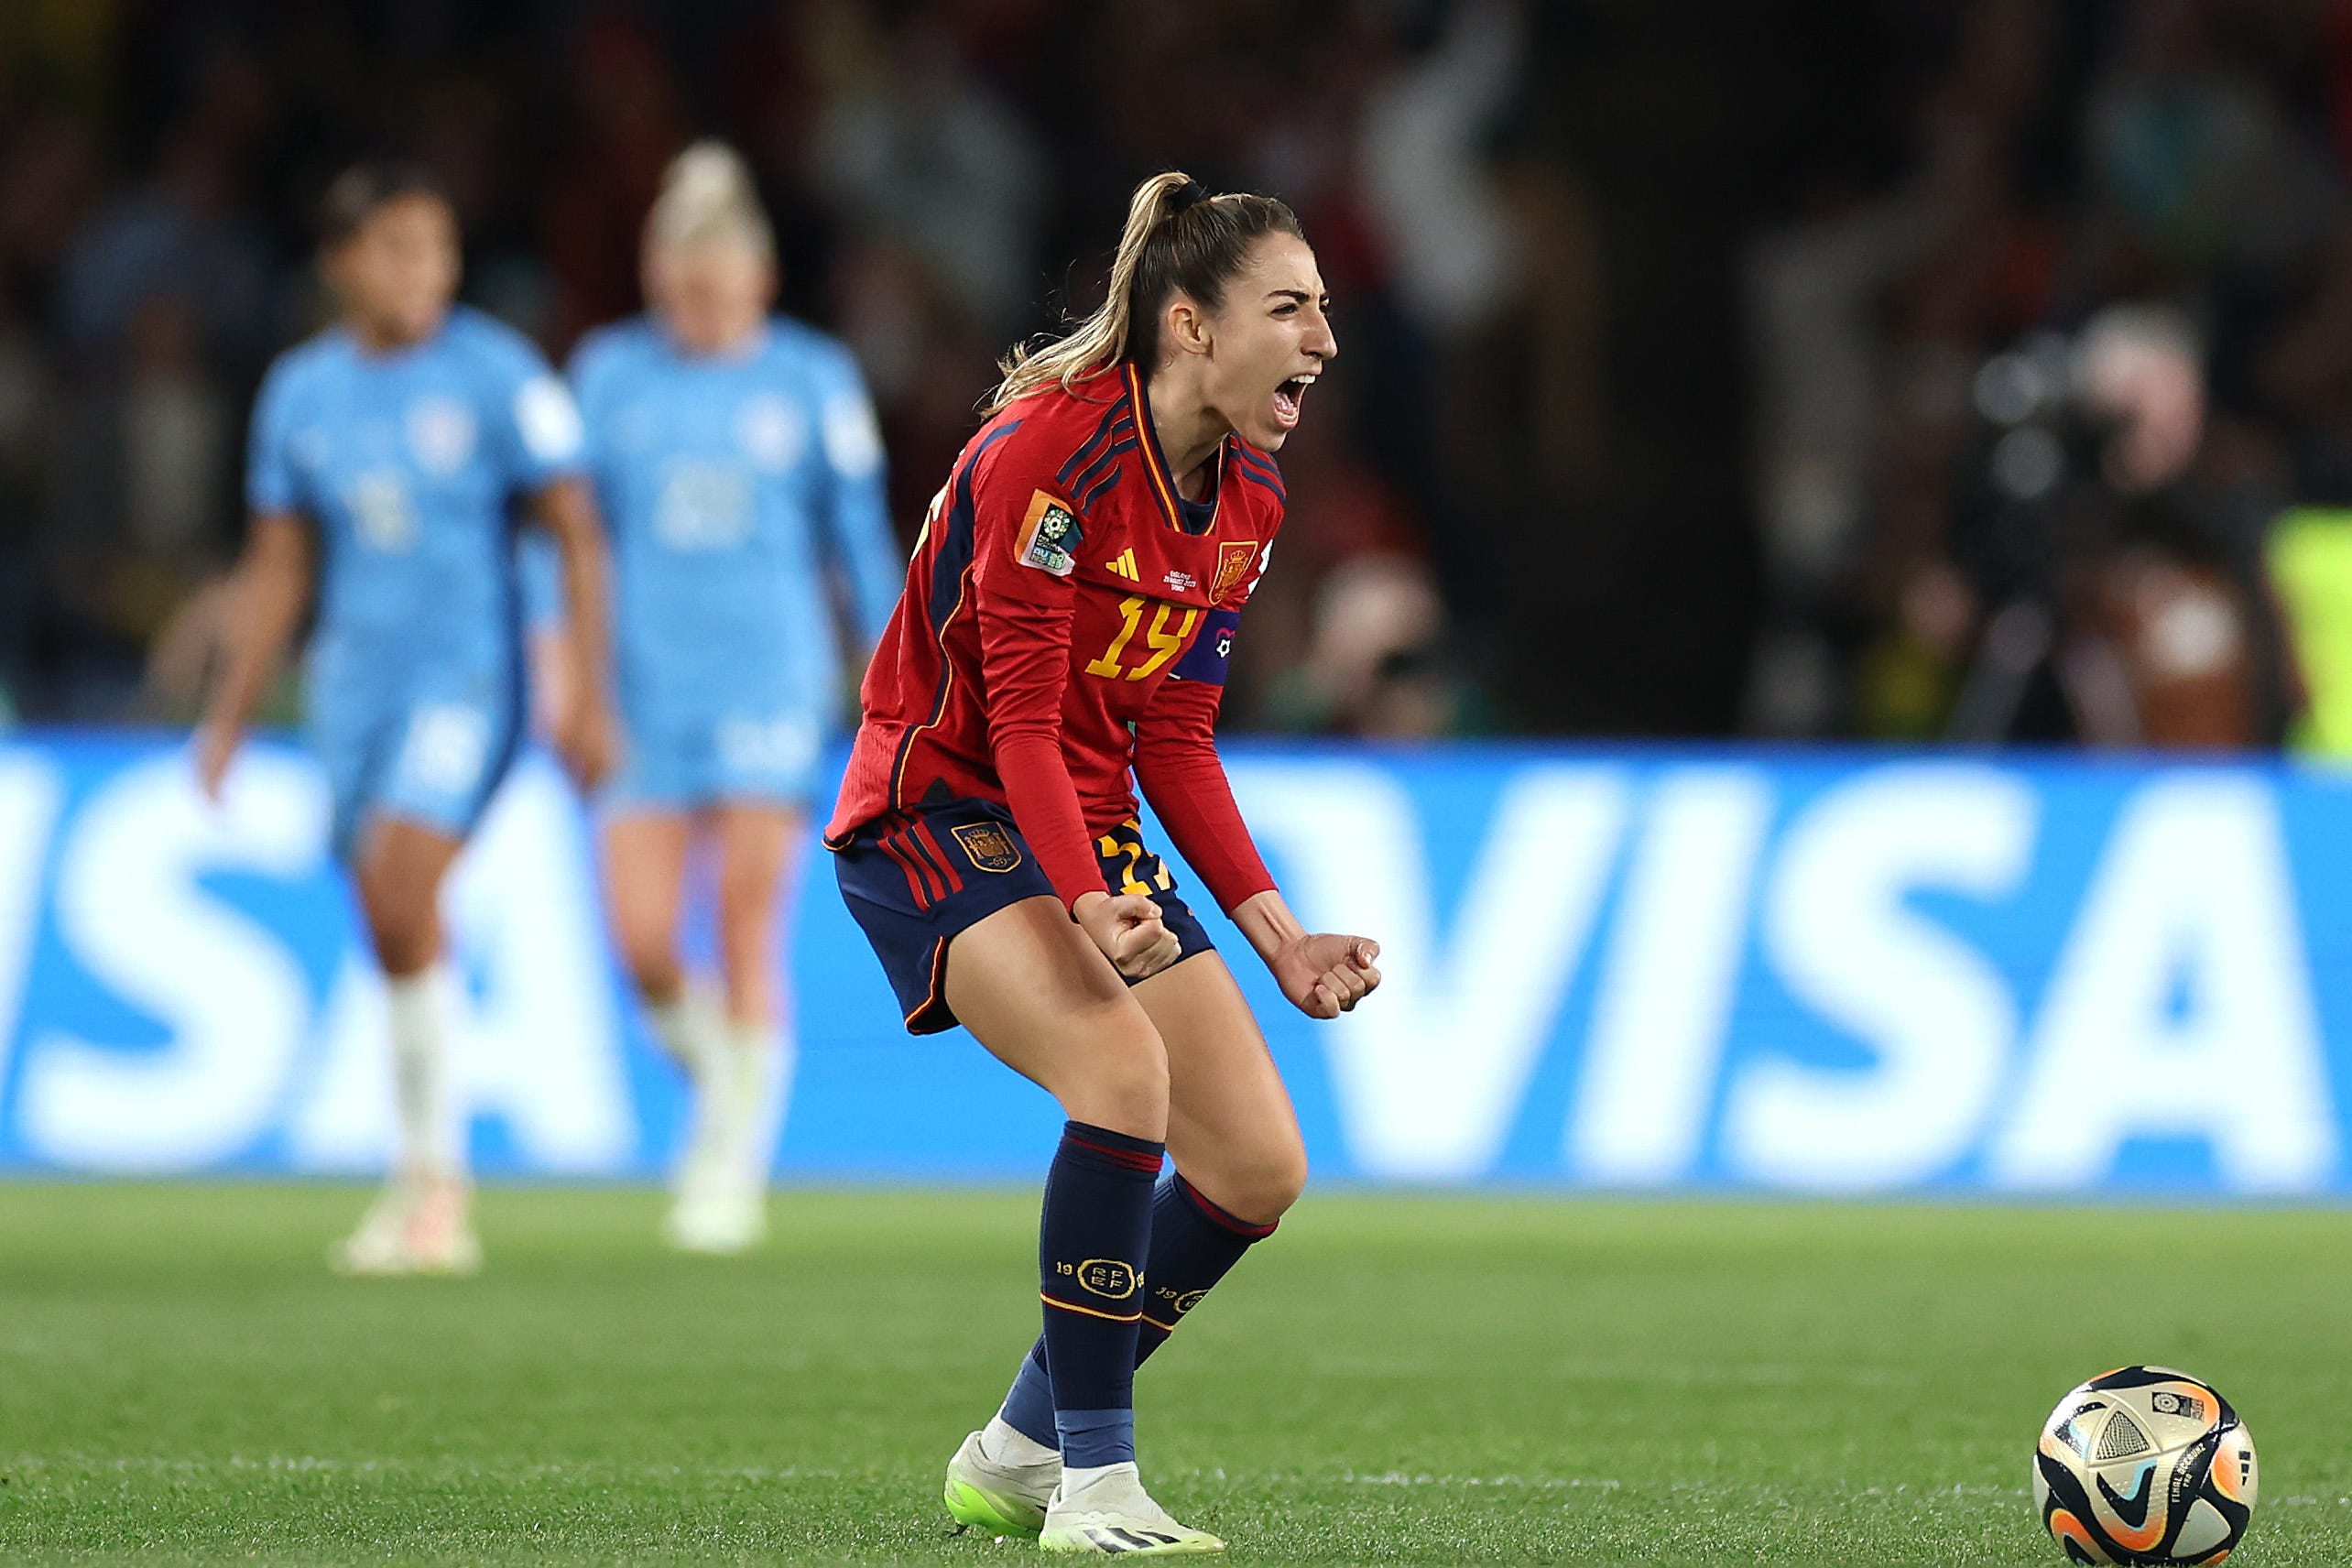 England vs. Spain Women's World Cup final live updates score, odds